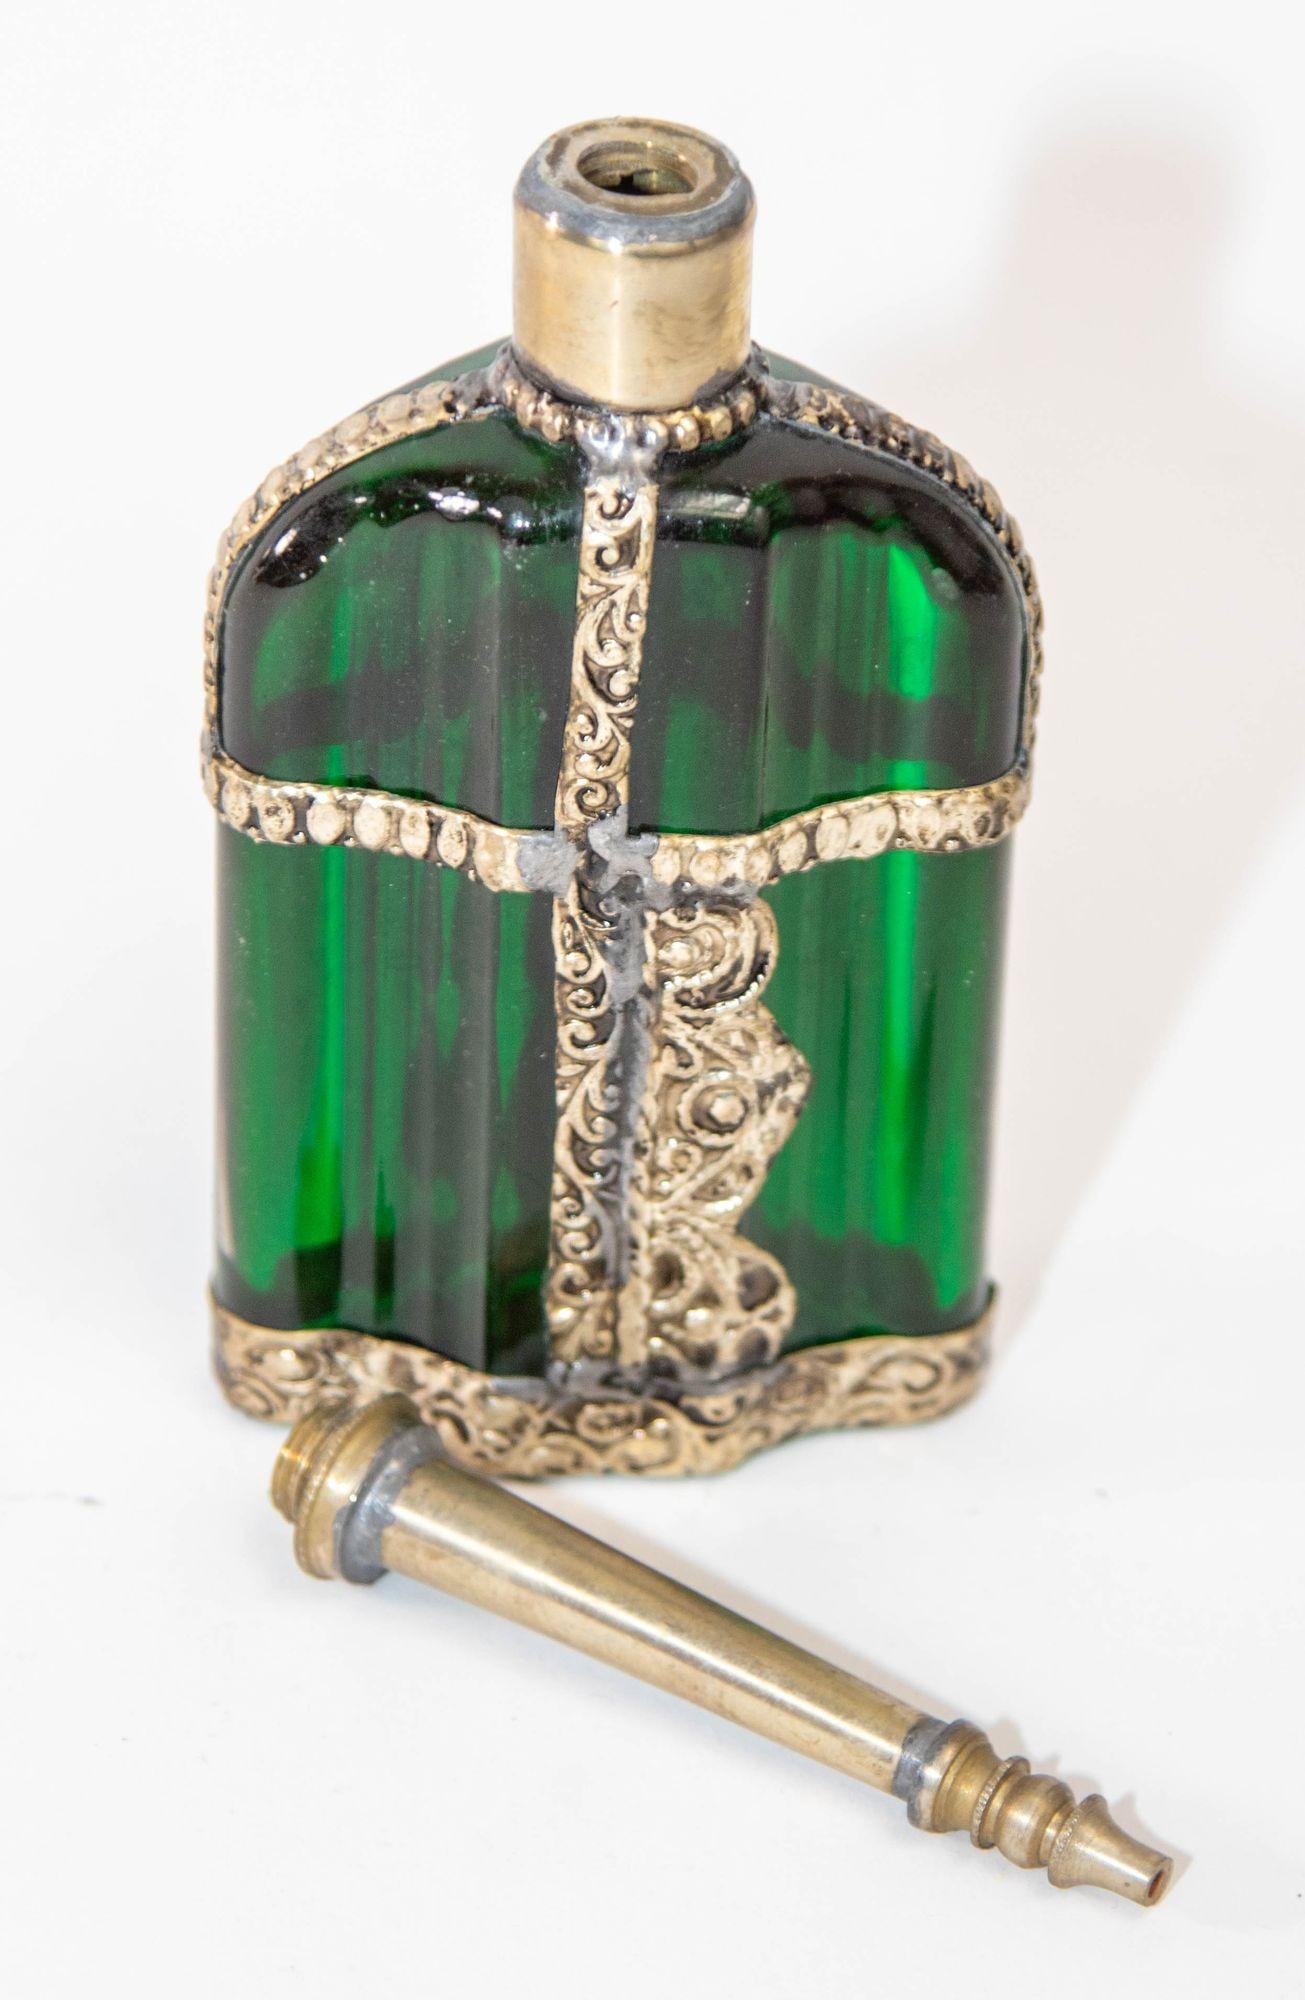 Flacon de flacon de parfum mauresque en verre vert émeraude avec superposition de métal embossé en vente 6